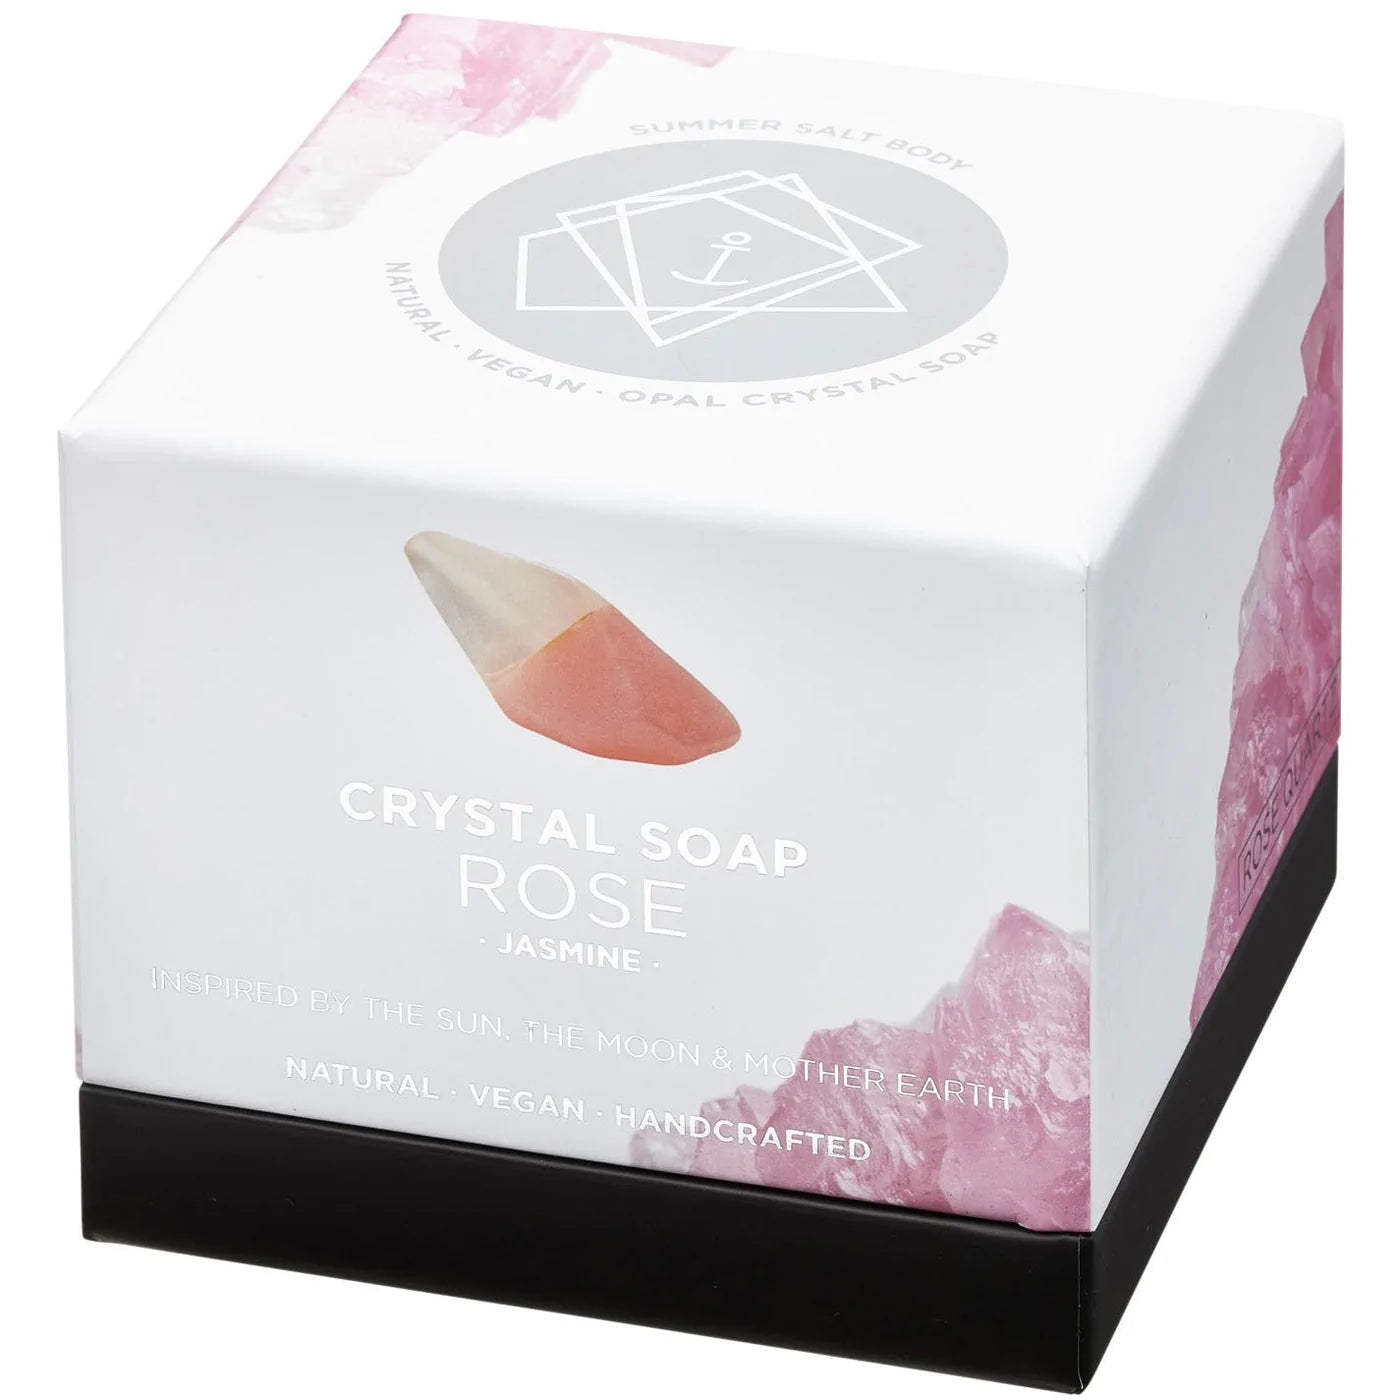 Crystal Soap - Rose Quartz